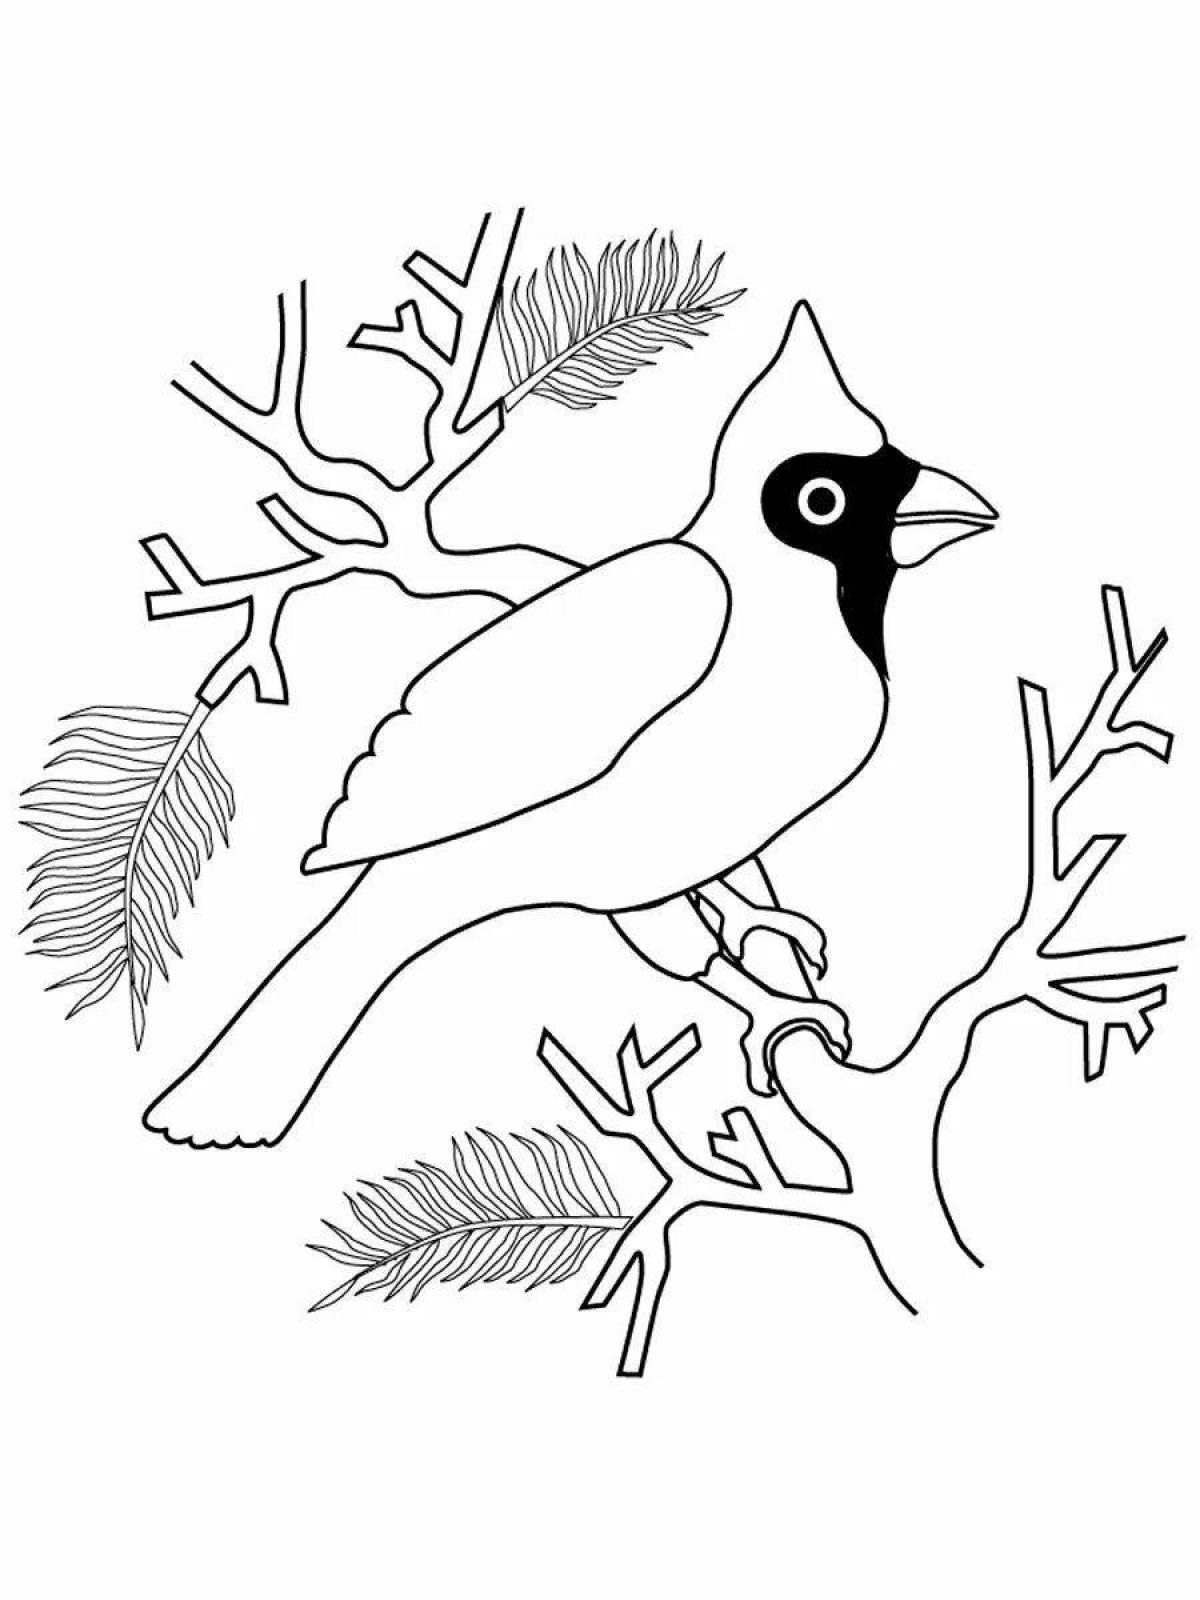 Coloring page joyful winter birds